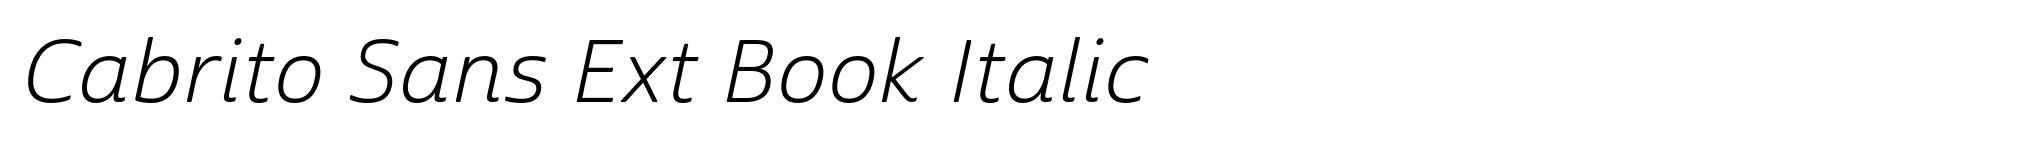 Cabrito Sans Ext Book Italic image